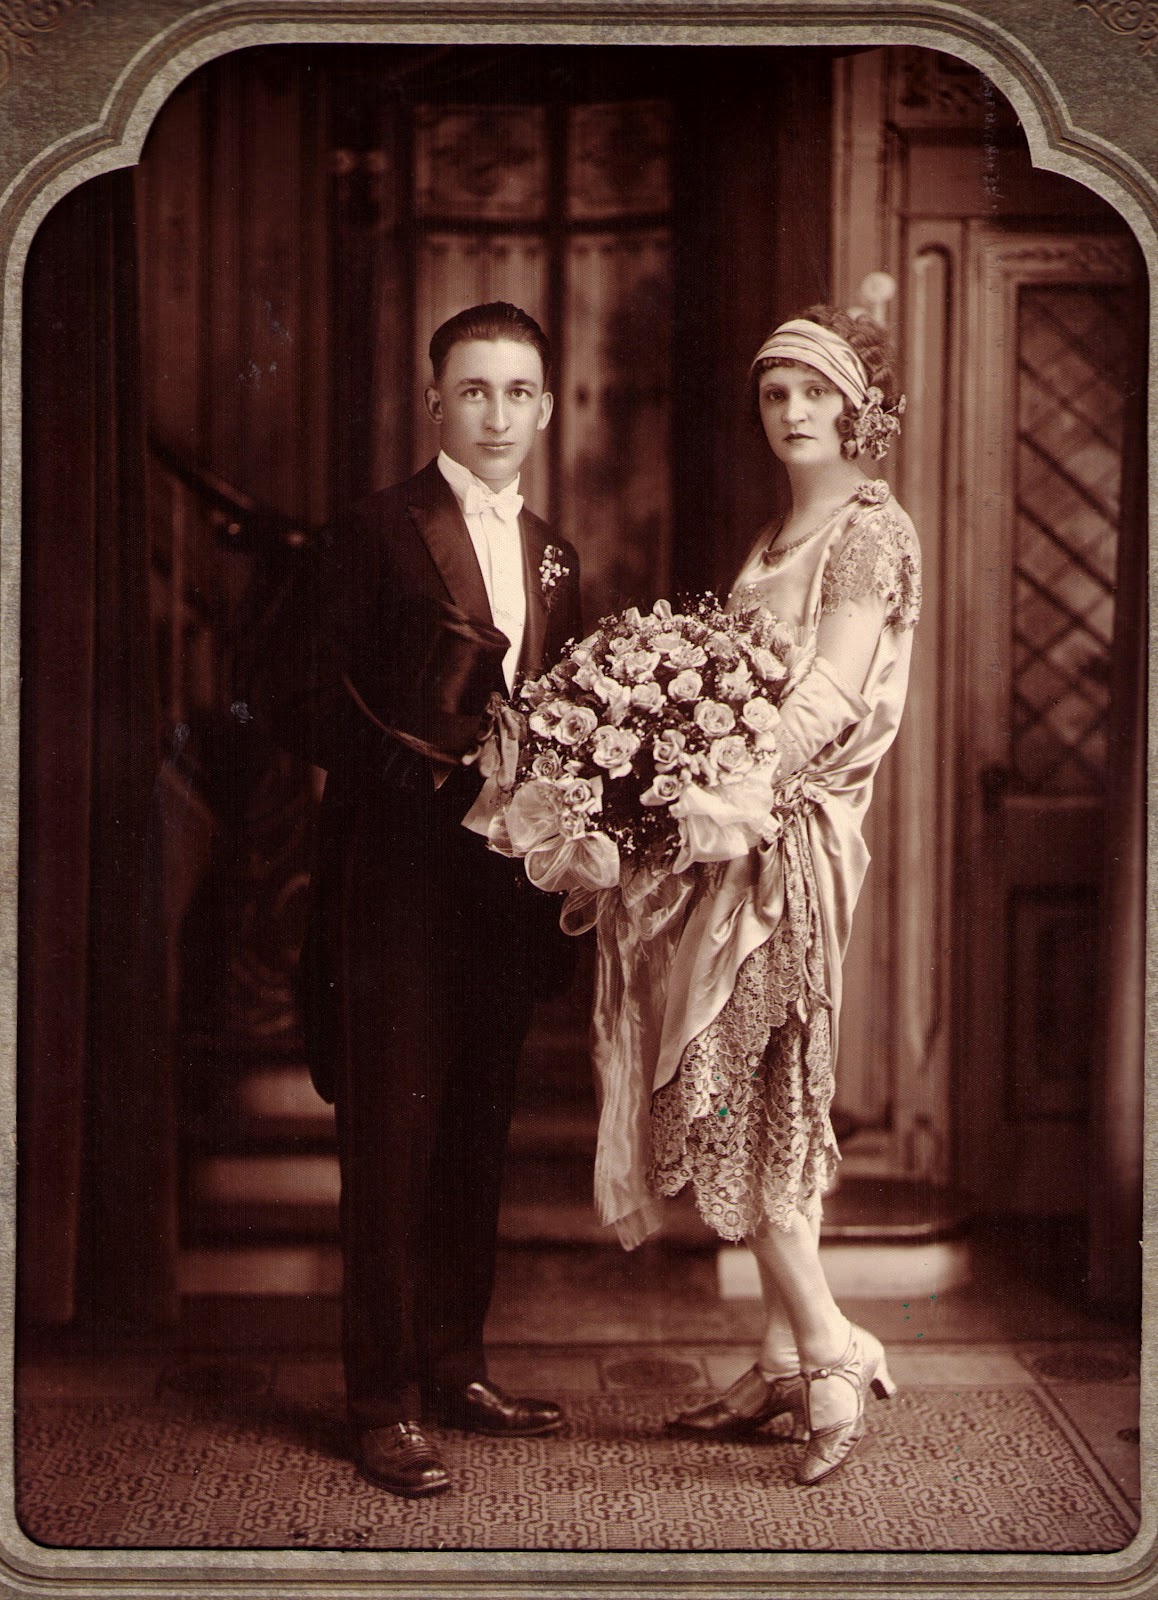 Gene and Clara's 1920s Wedding Portraits